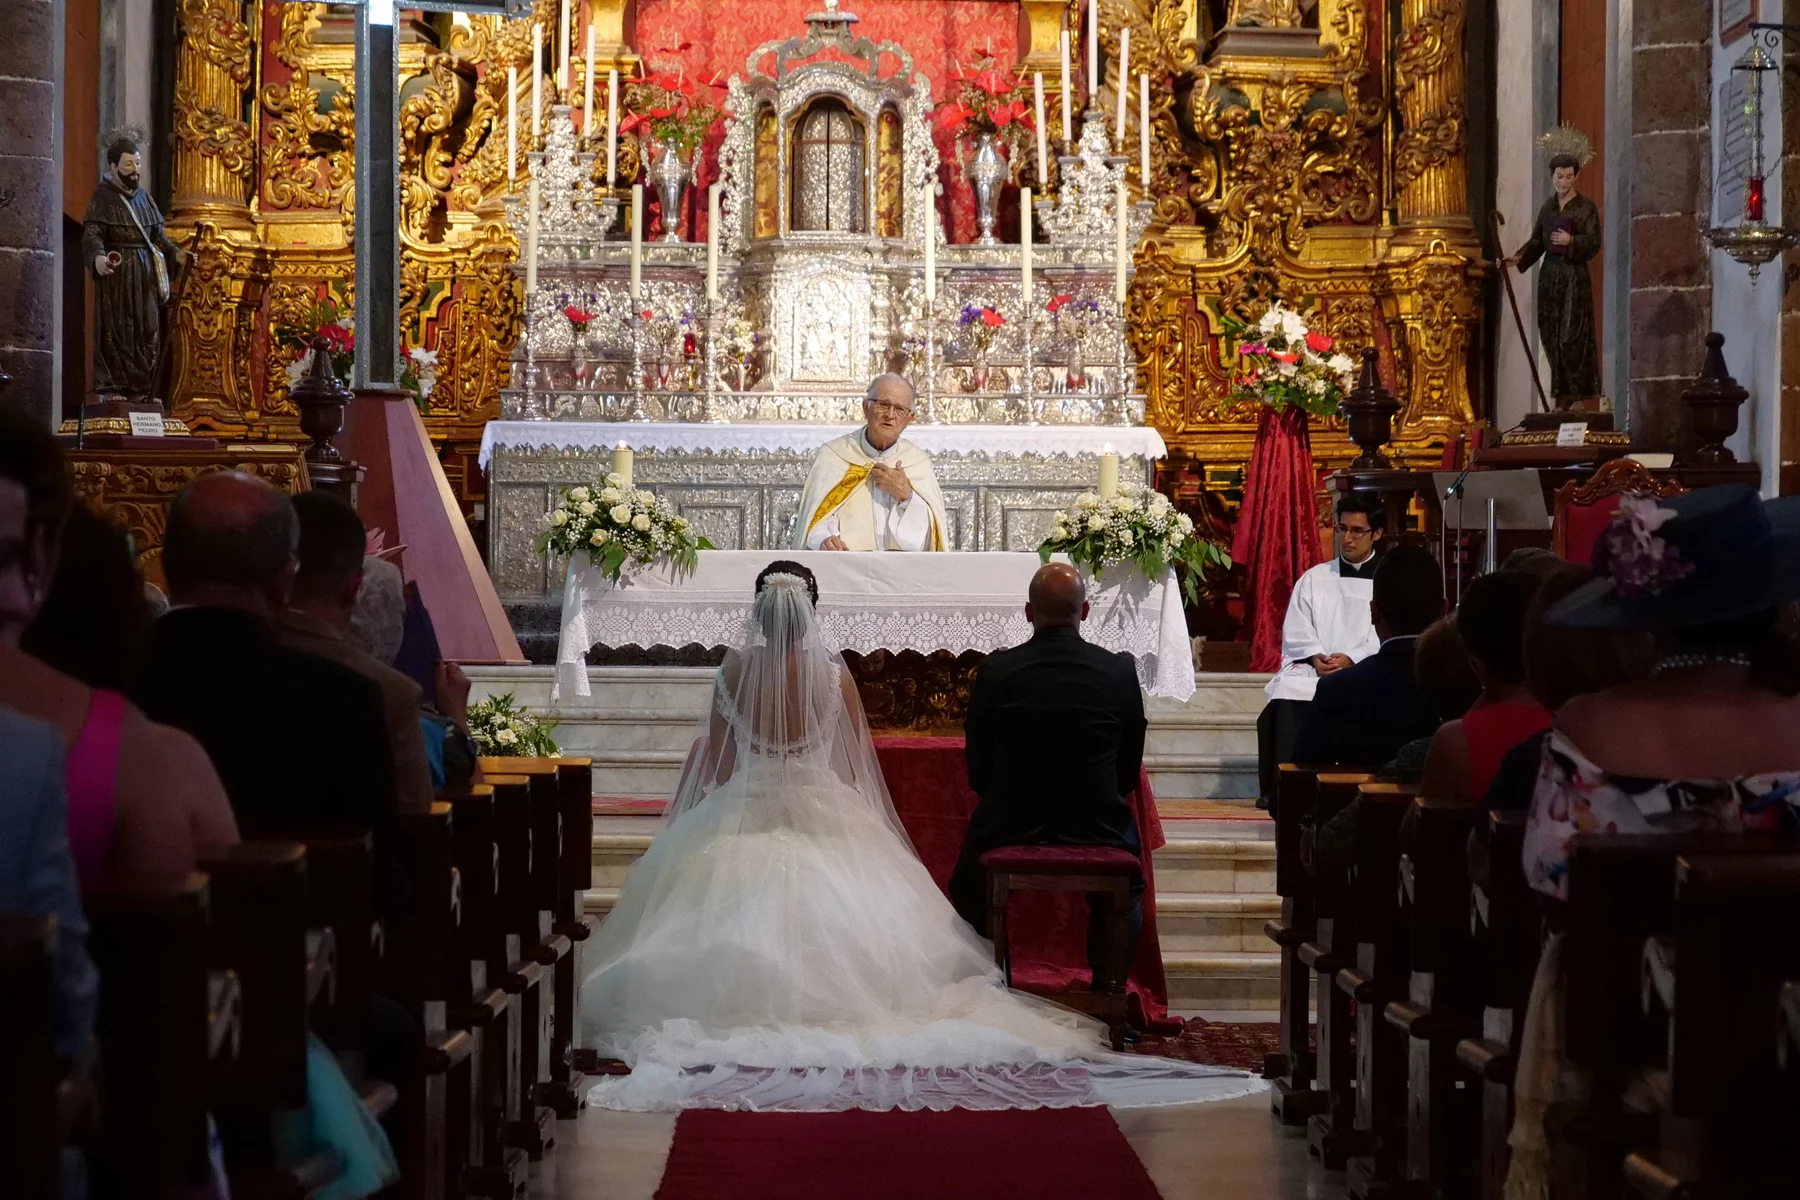 Religious wedding in Spain